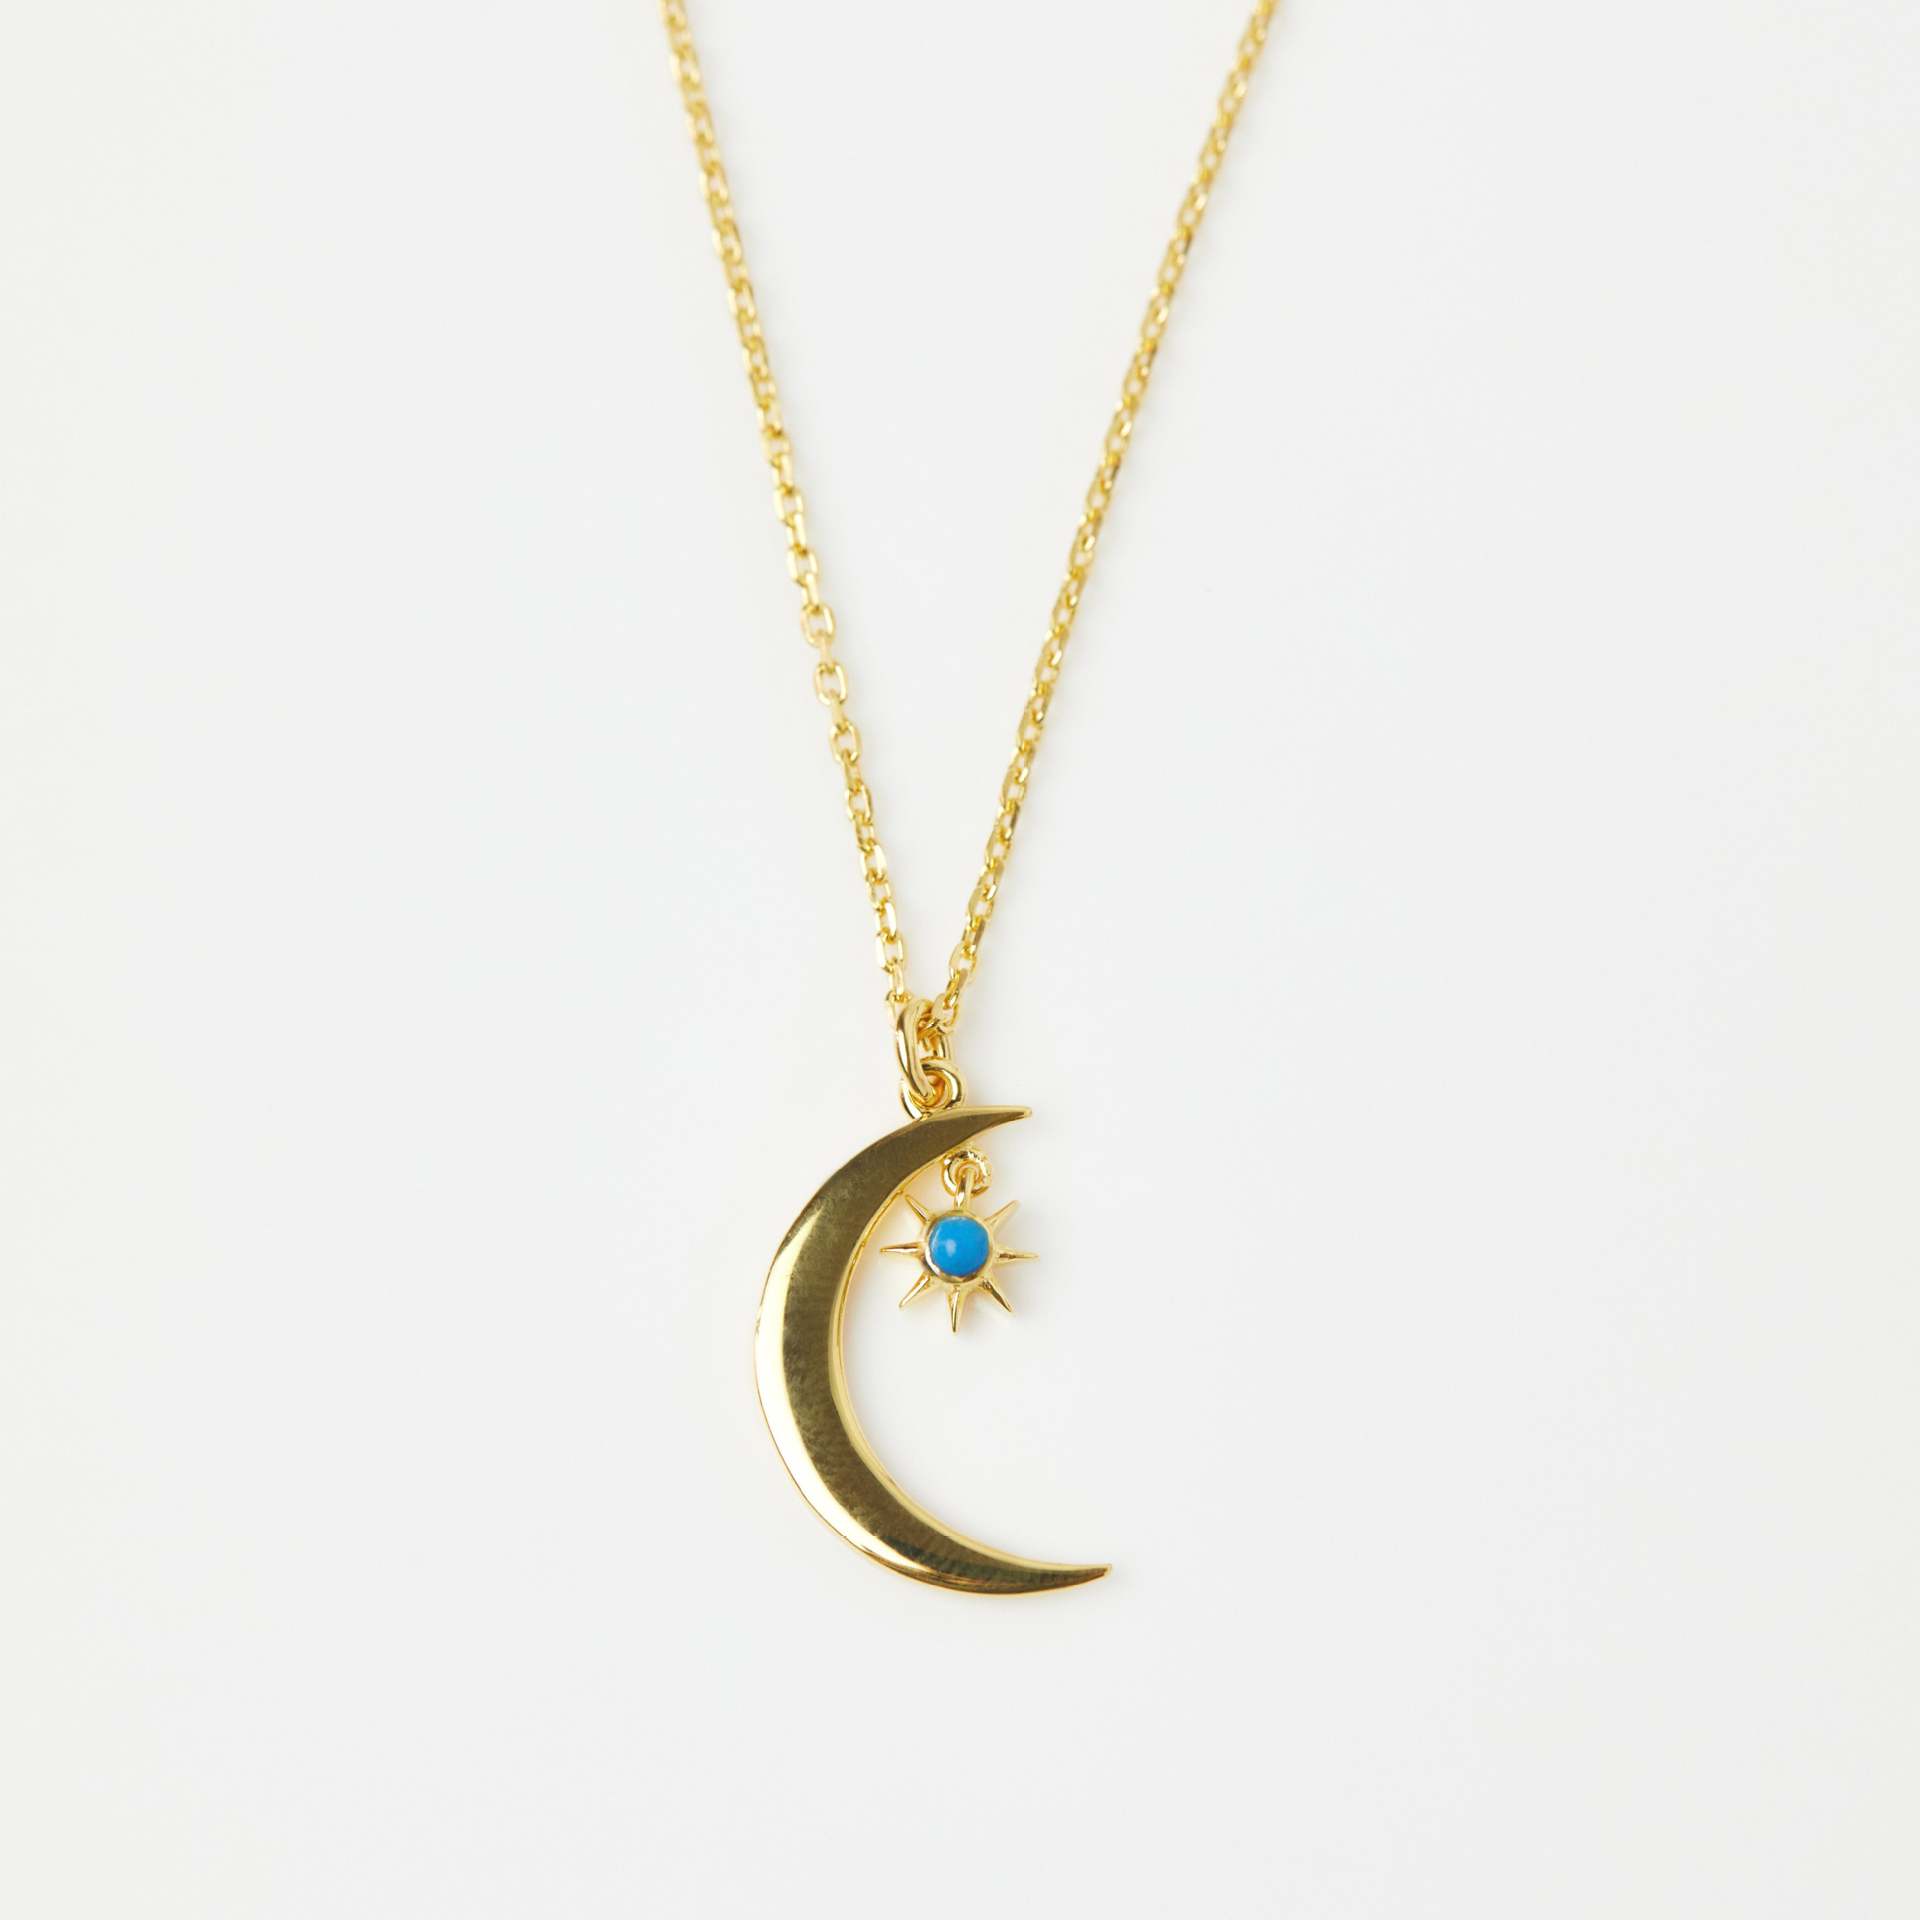 Birthstone New Moon Necklace.j